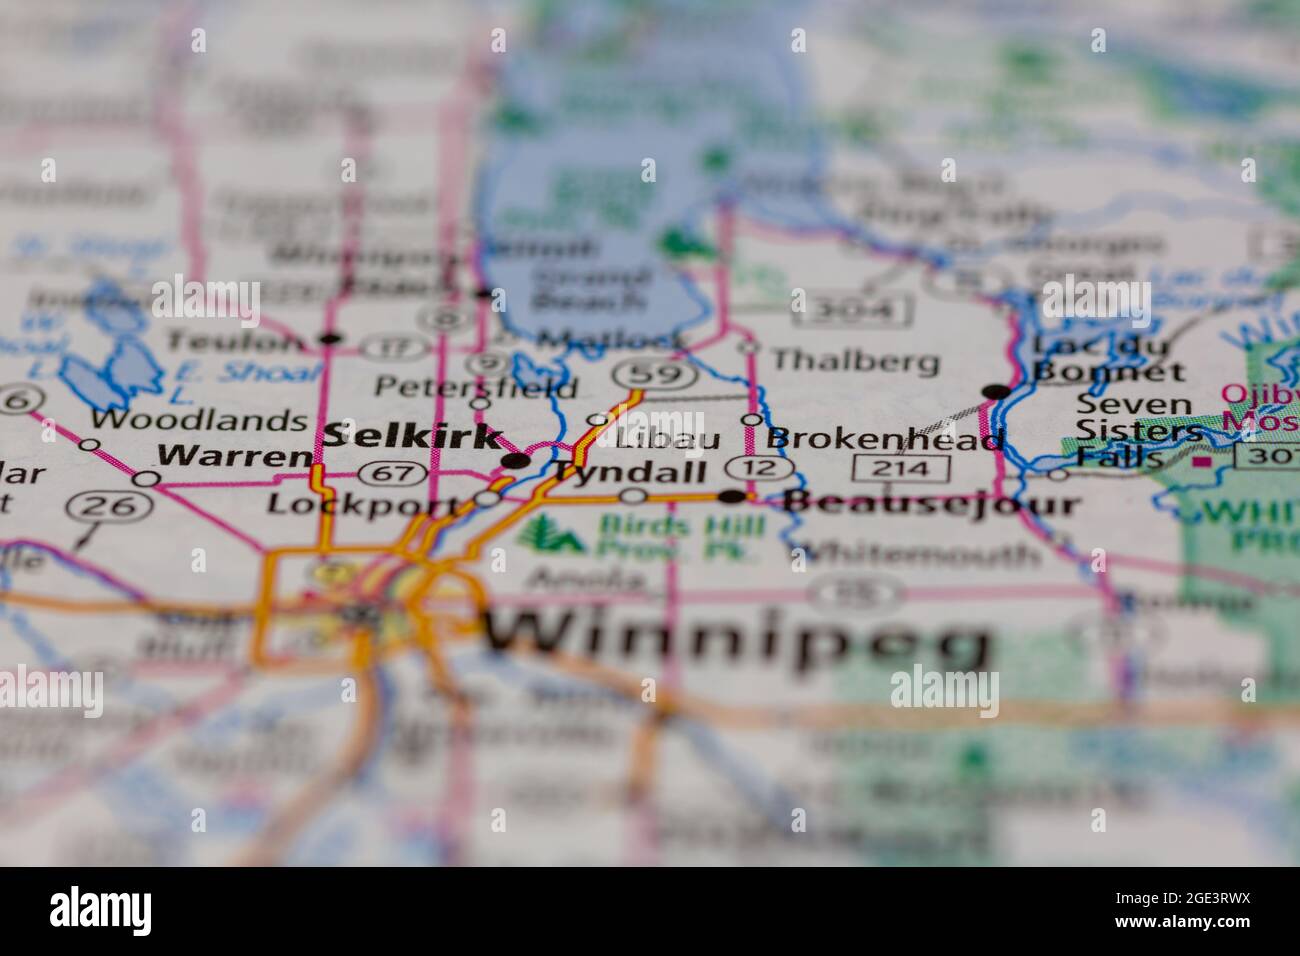 Libau Saskatchewan Canada Shown on a road map or Geography map Stock Photo